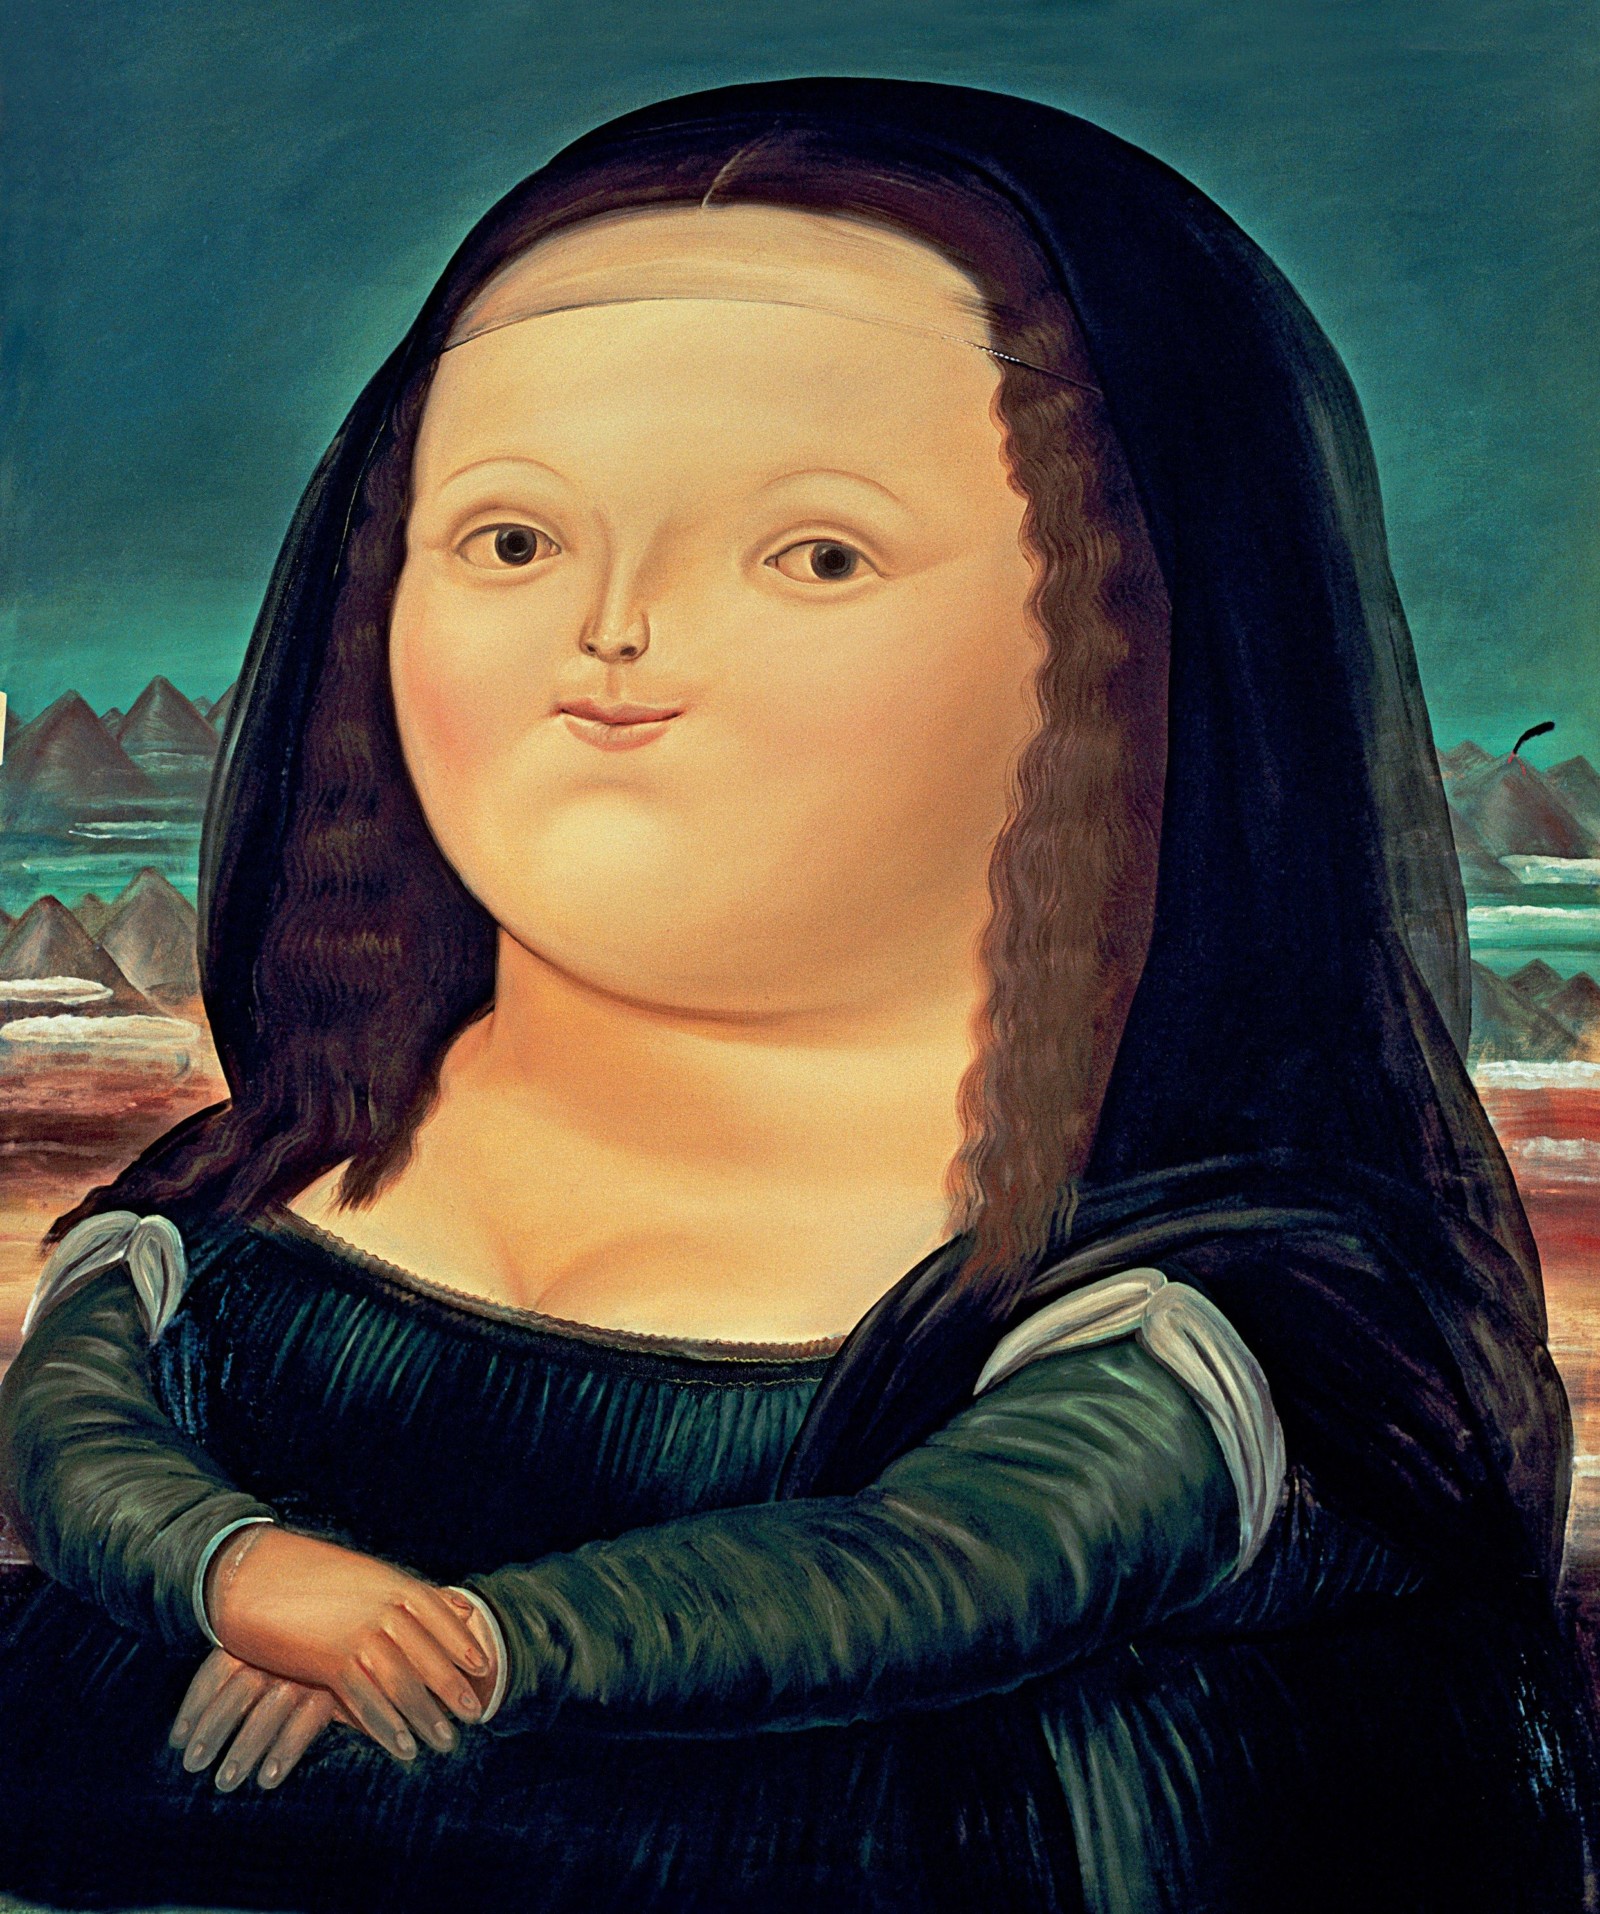 Fernando-Botero-Mona-Lisa-1978-183-x-166-cm-800x957@2x.jpg